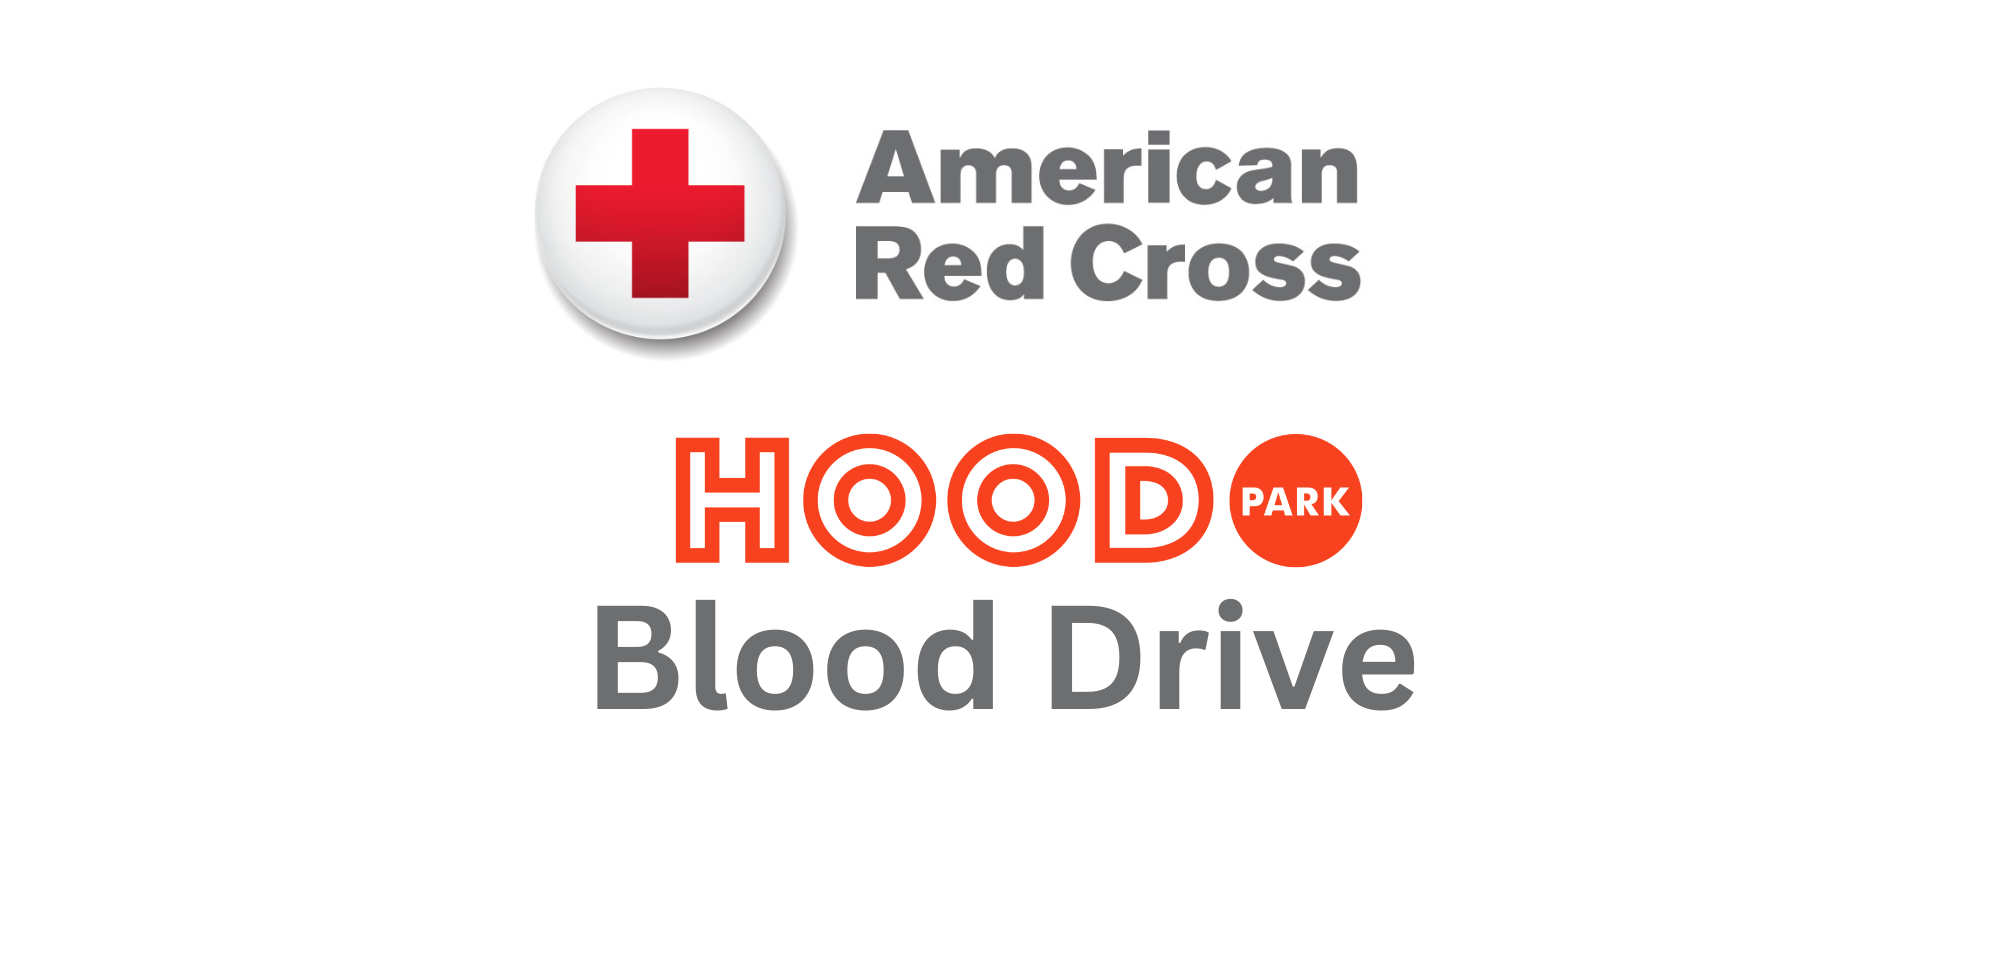 American Red Cross Blood Drive @ Hood park